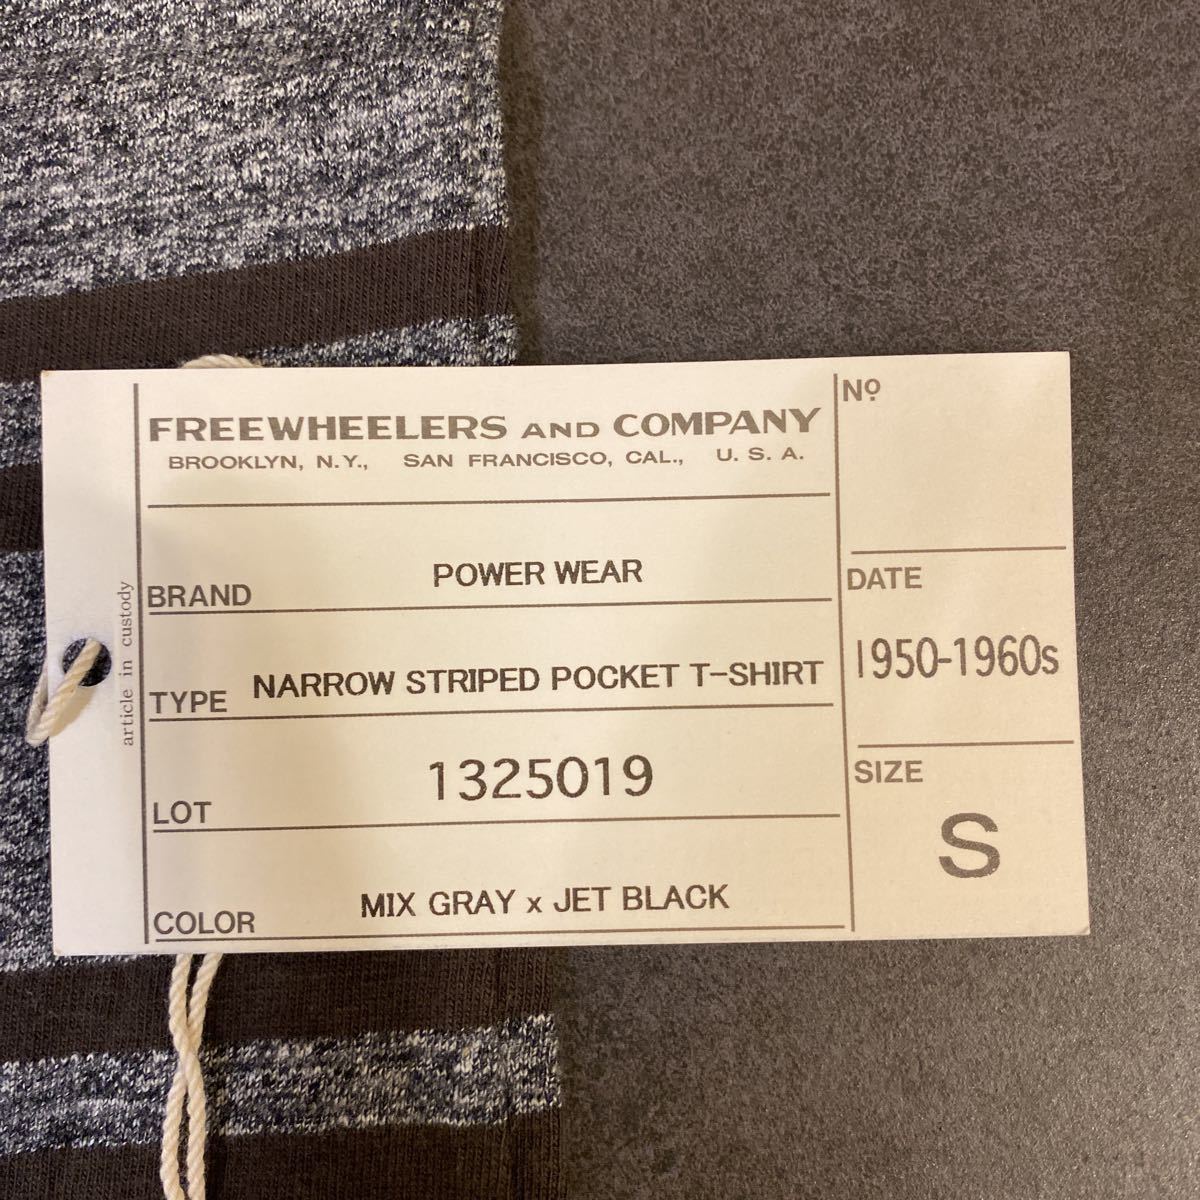 FREEWHEELERS POWER WEAR タイプ:NARROW STRIPED POCKET T-SHIRT 色:MIX GRAY×JET BLACK サイズ:36-38 S_画像2